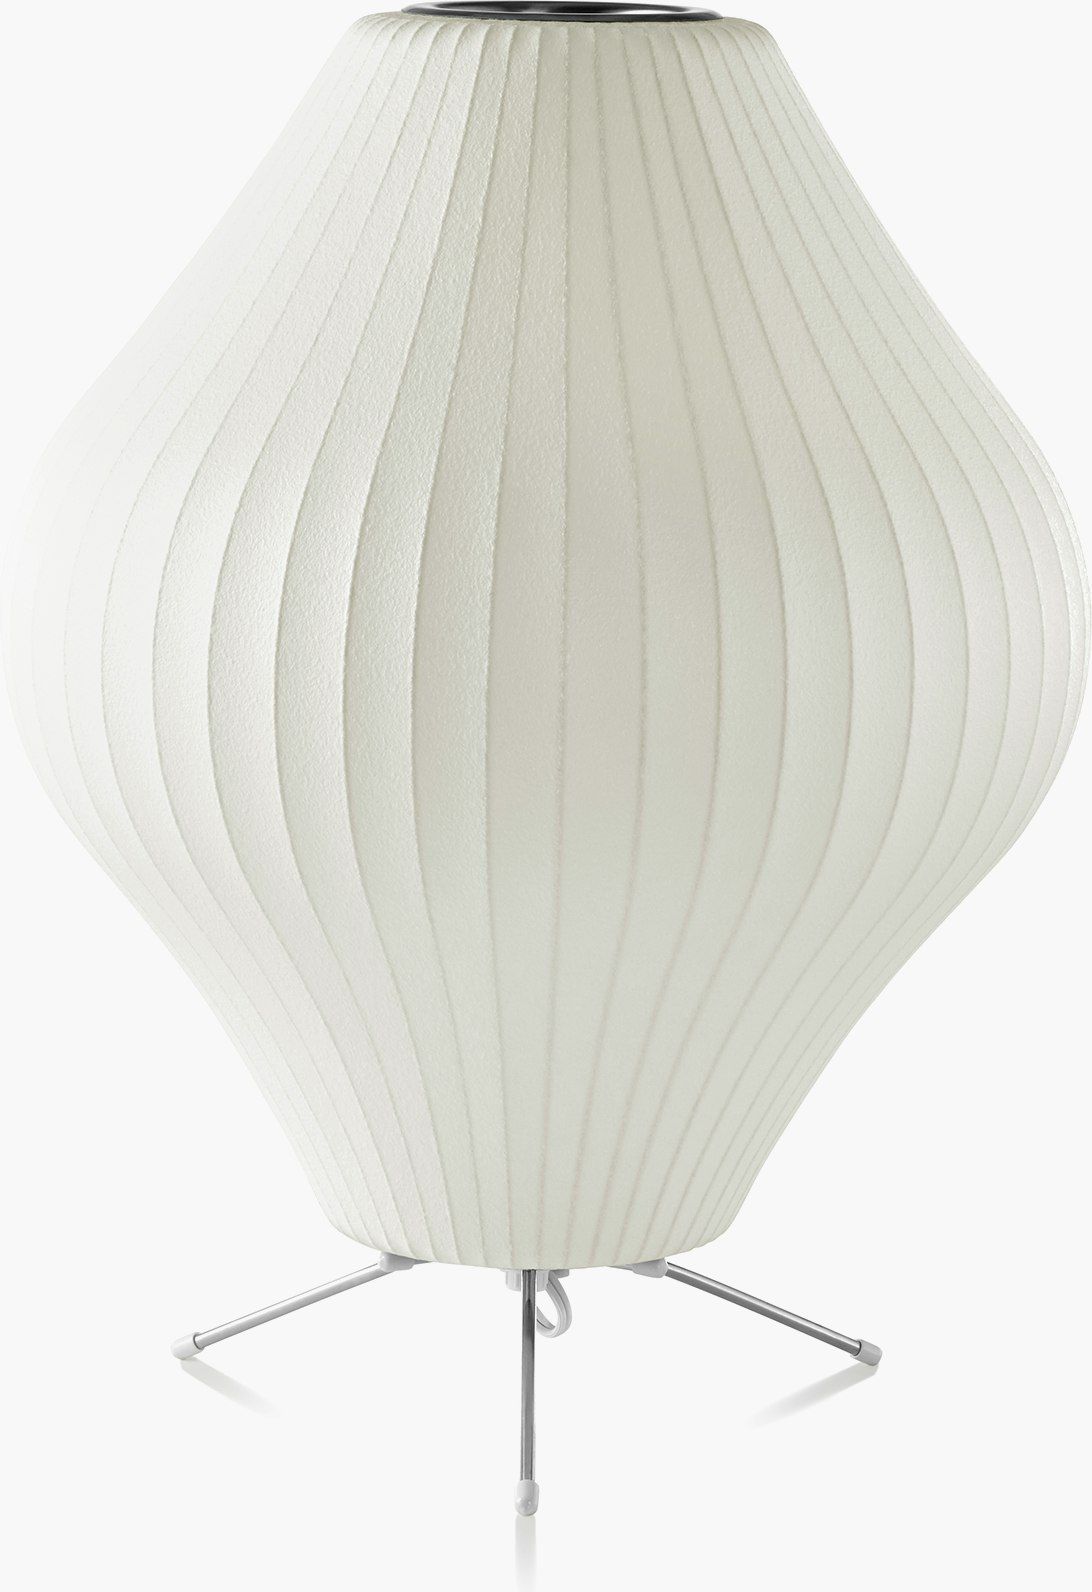 Nelson Ball Tripod Lamp | Design Within Reach